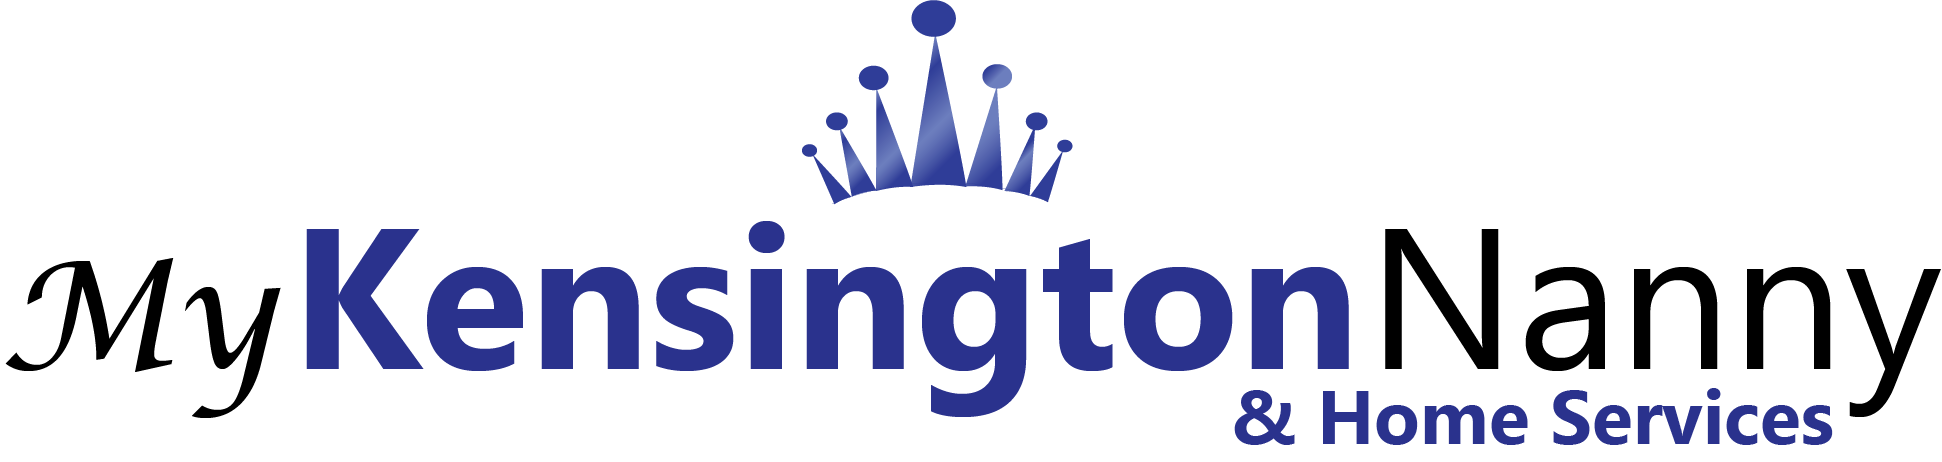 Kengsington Nanny logo